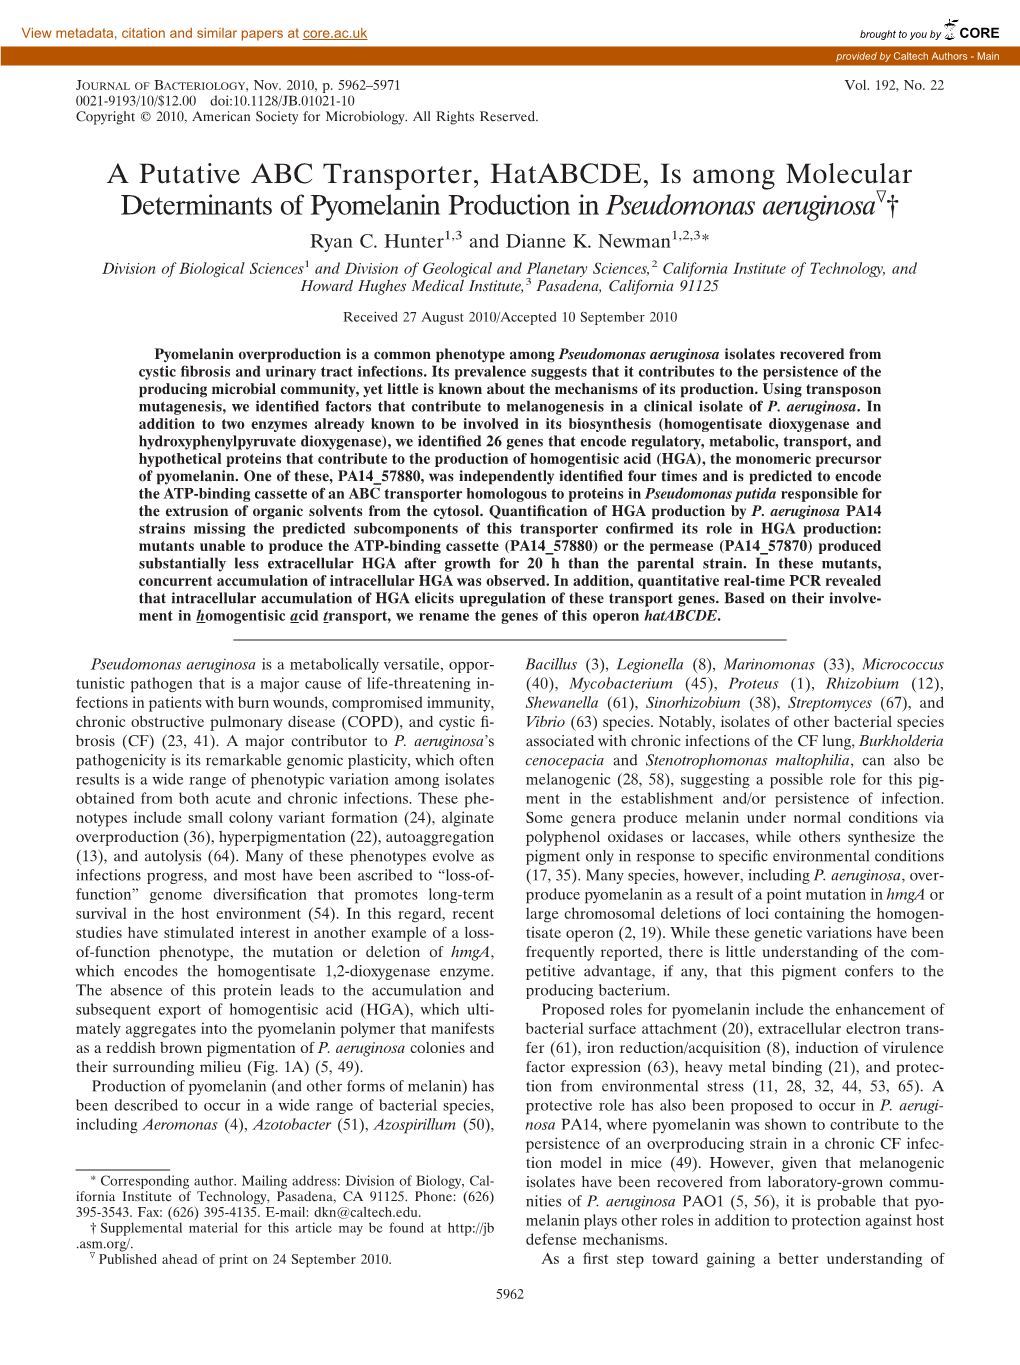 A Putative ABC Transporter, Hatabcde, Is Among Molecular Determinants of Pyomelanin Production in Pseudomonas Aeruginosaᰔ† Ryan C